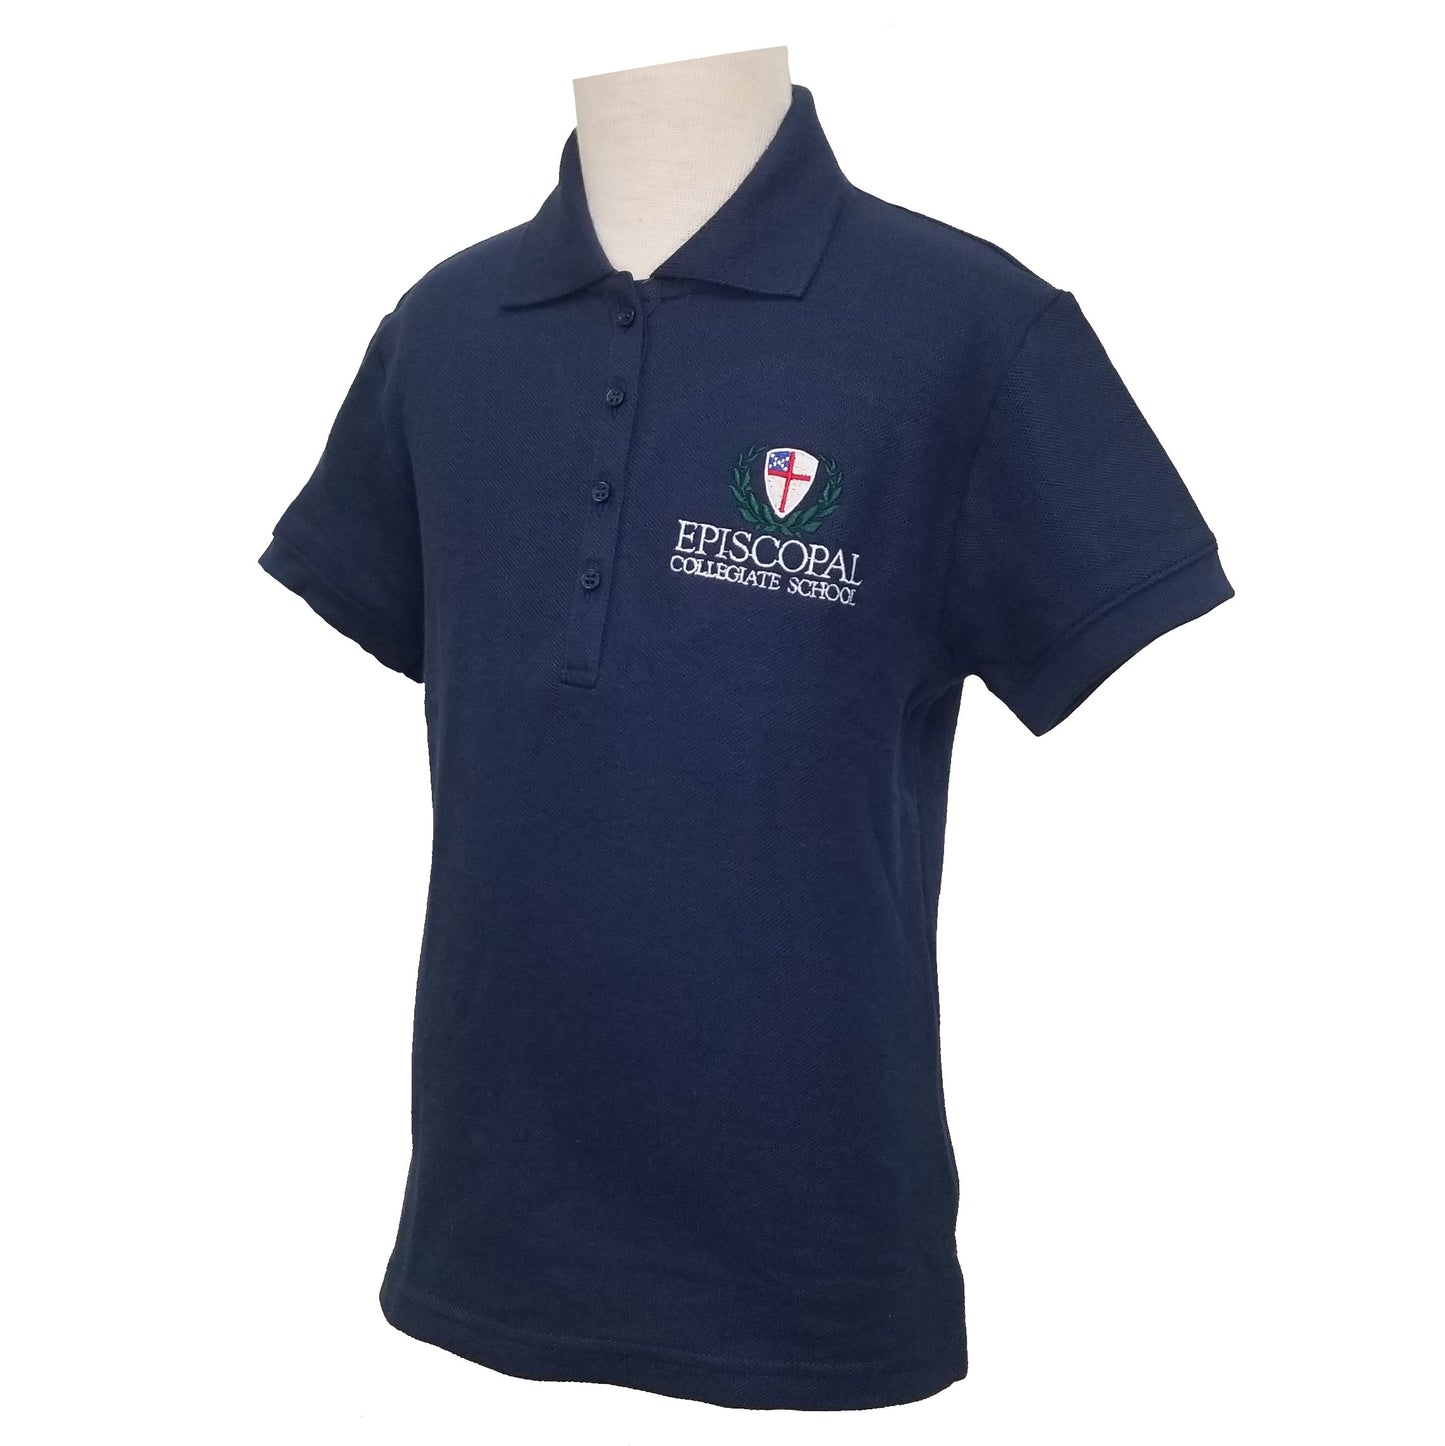 Youth Girl Cut Short Sleeve Polo With Episcopal Collegiate School Logo